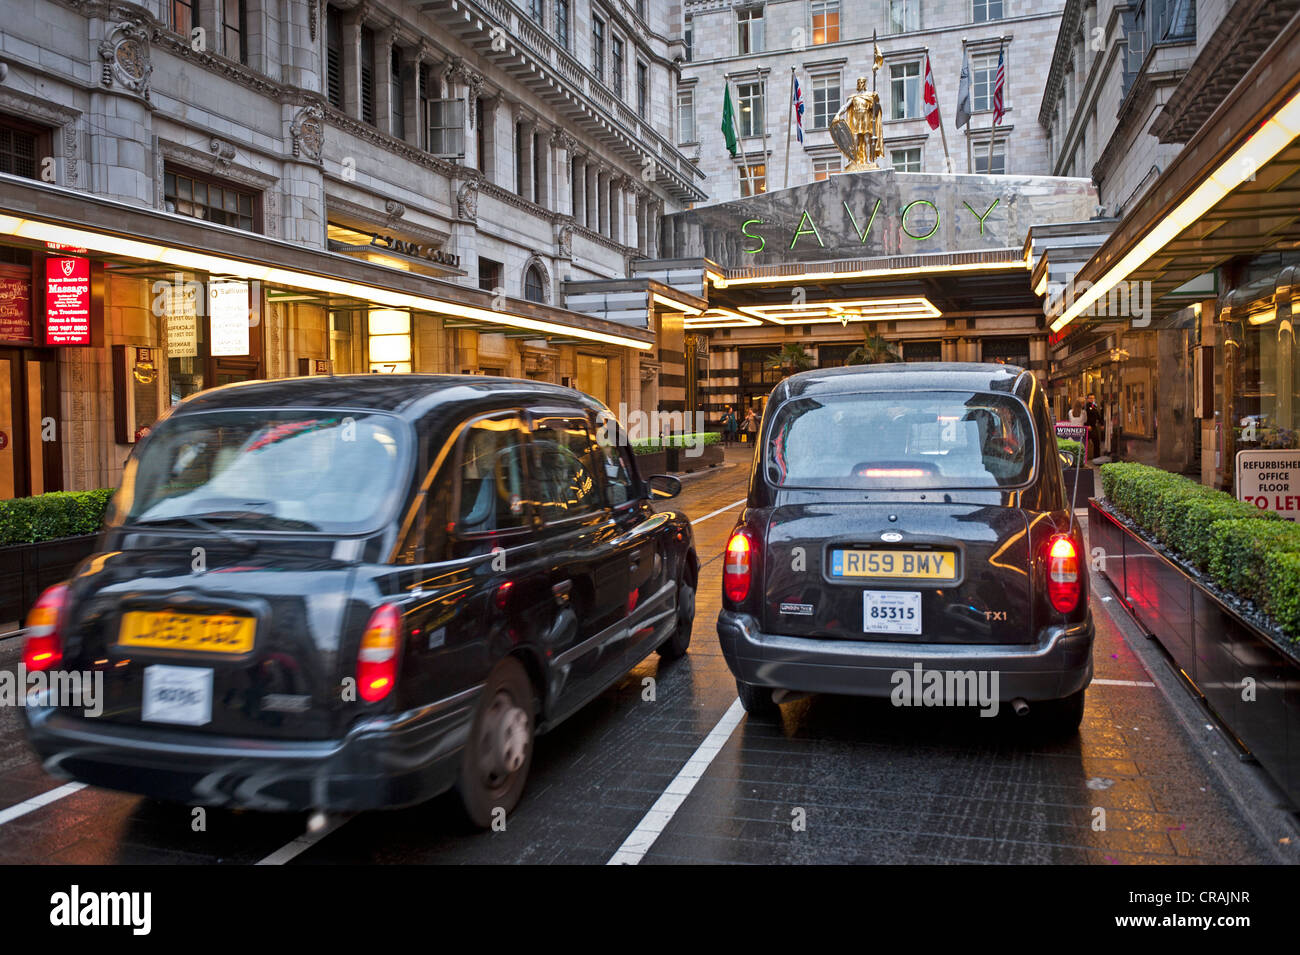 Black cabs, Savoy Hotel, London, England, United Kingdom, Europe Stock Photo